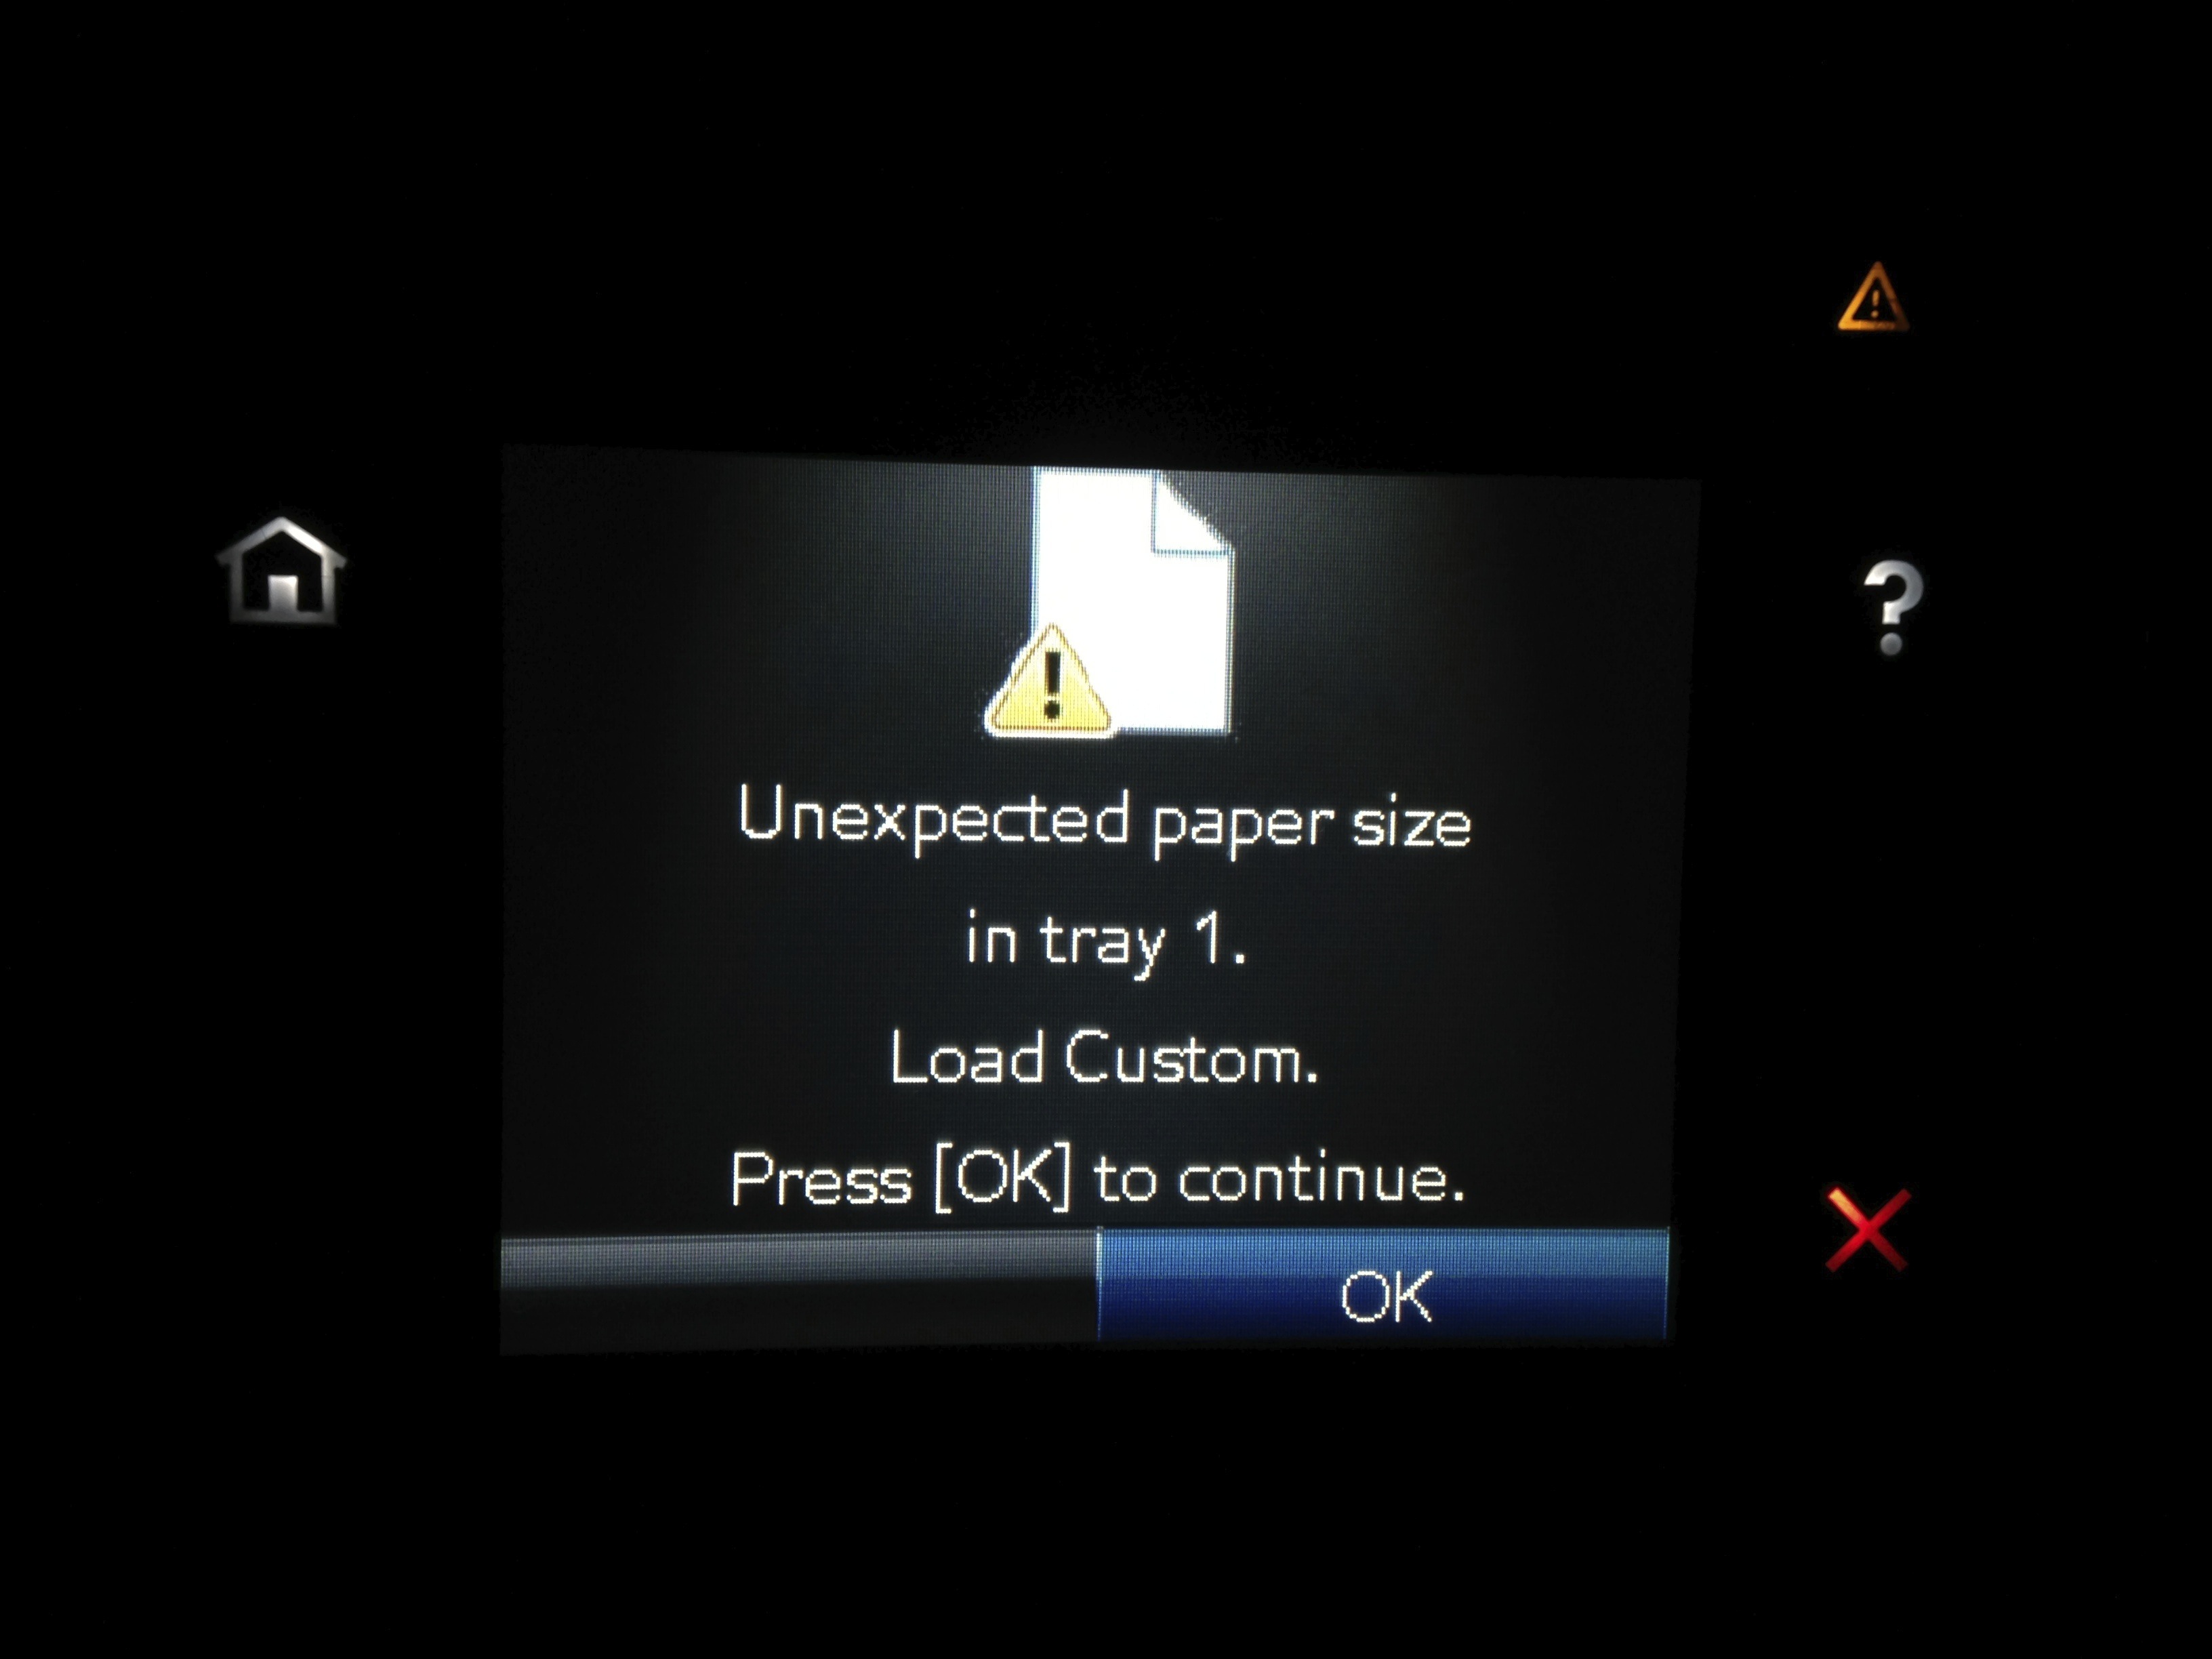 HP-Error-Unexpected-Paper-Size.jpg